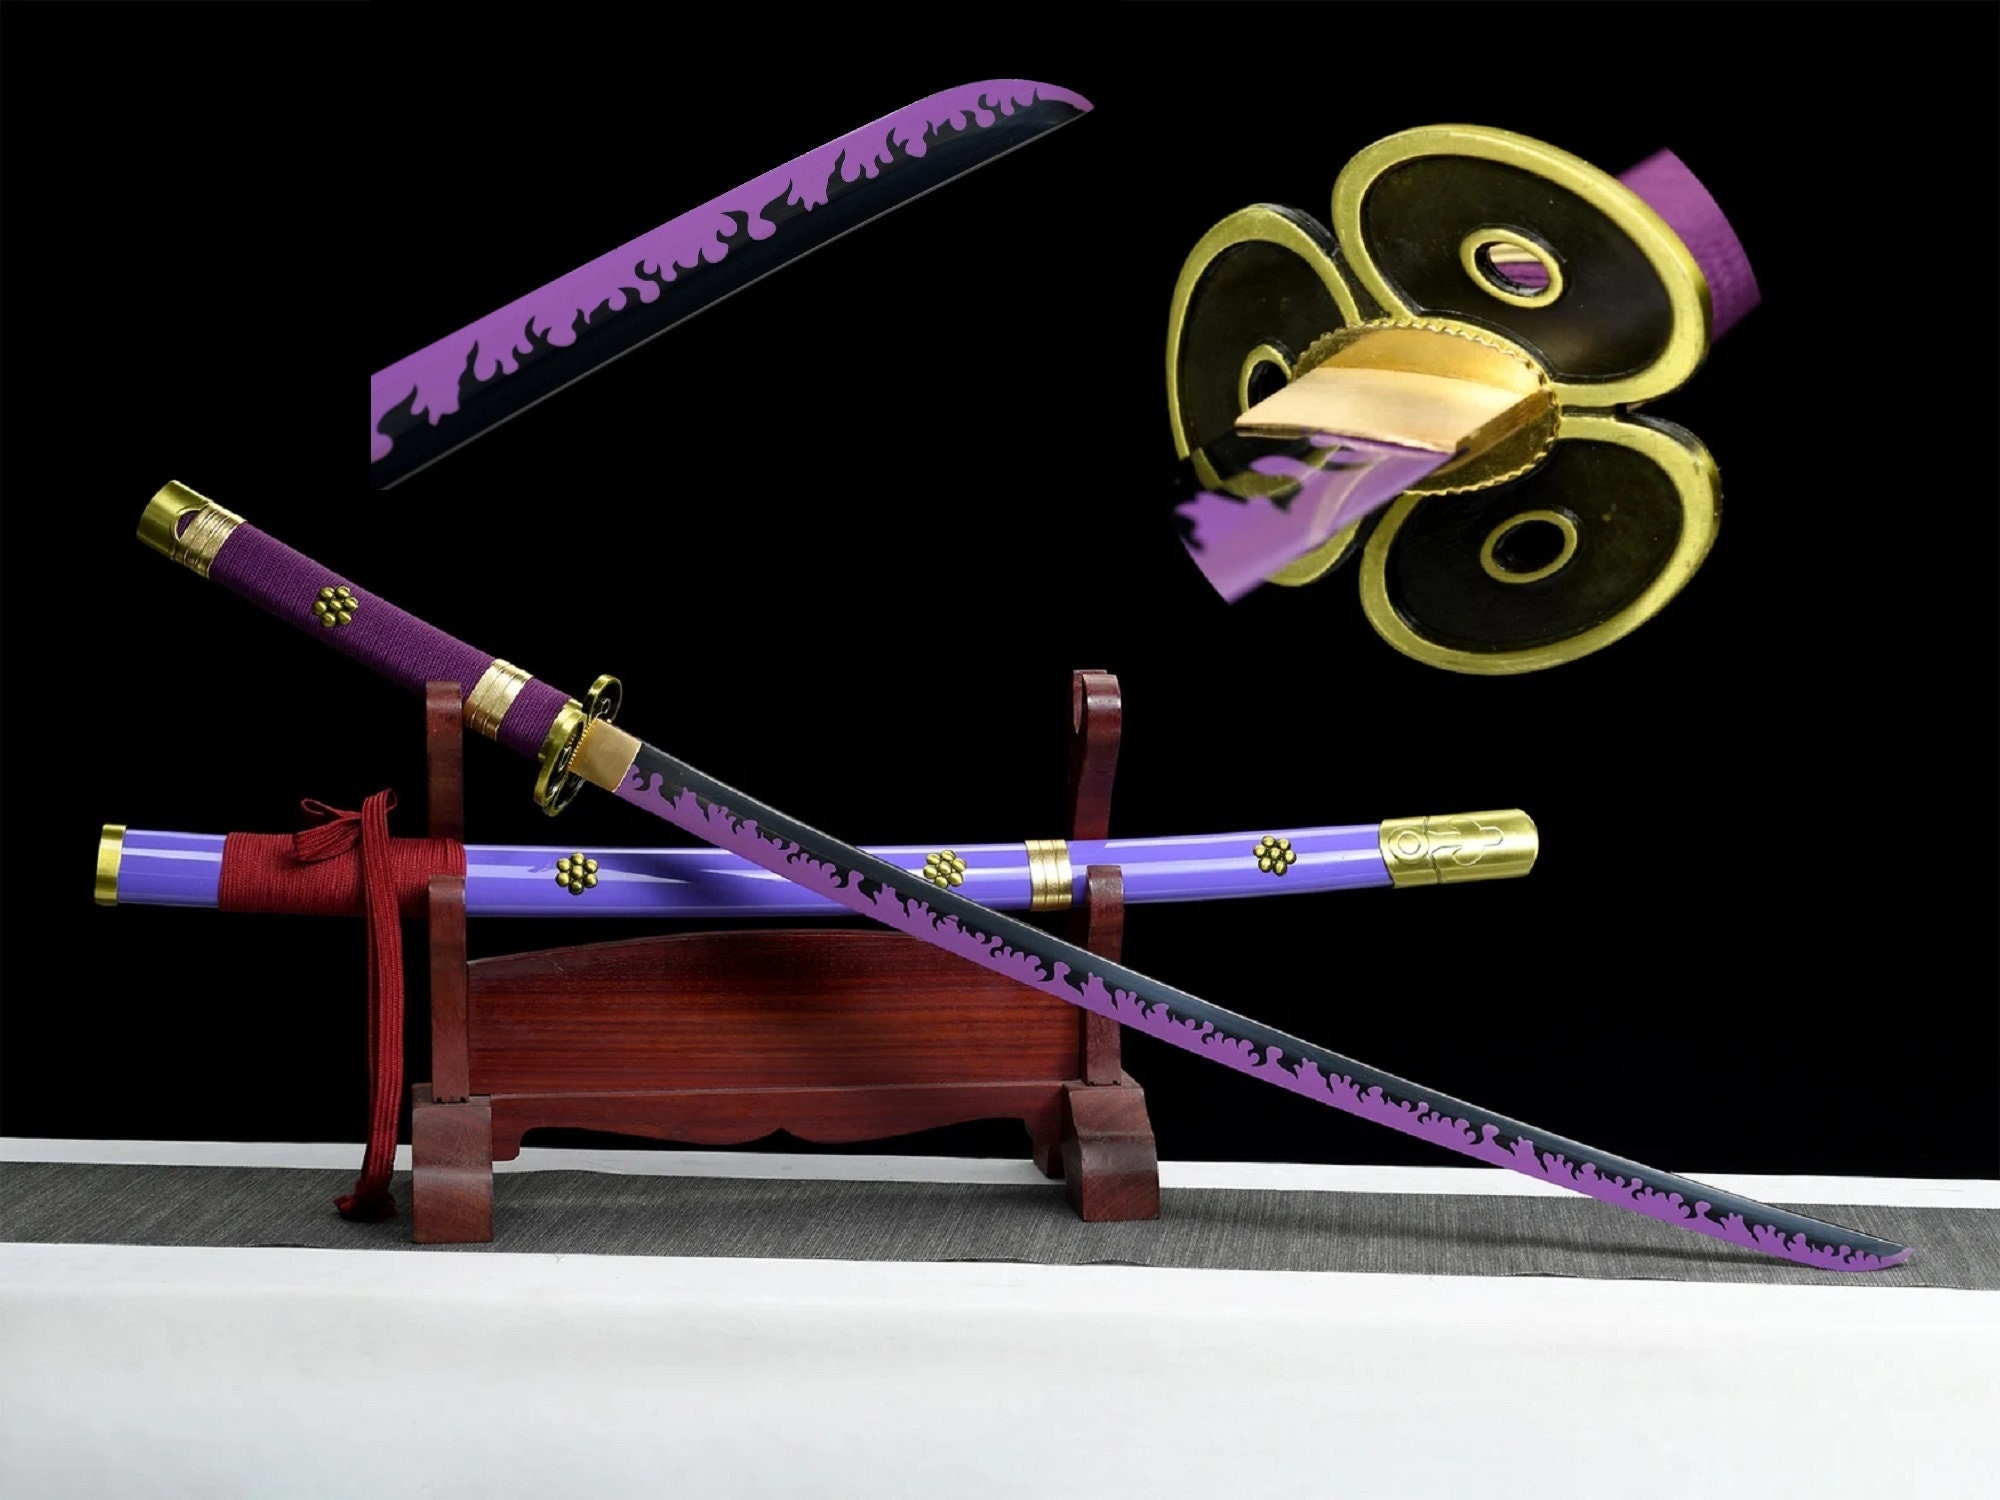 Hejiu Roronoa Zoro Katana, Yama Enma Anime Samurai Cosplay Sword, Handmade  Japanese Katana, Replica Sword, Anime Original Texture, 1045 Carbon Steel  About 41 inch Overall